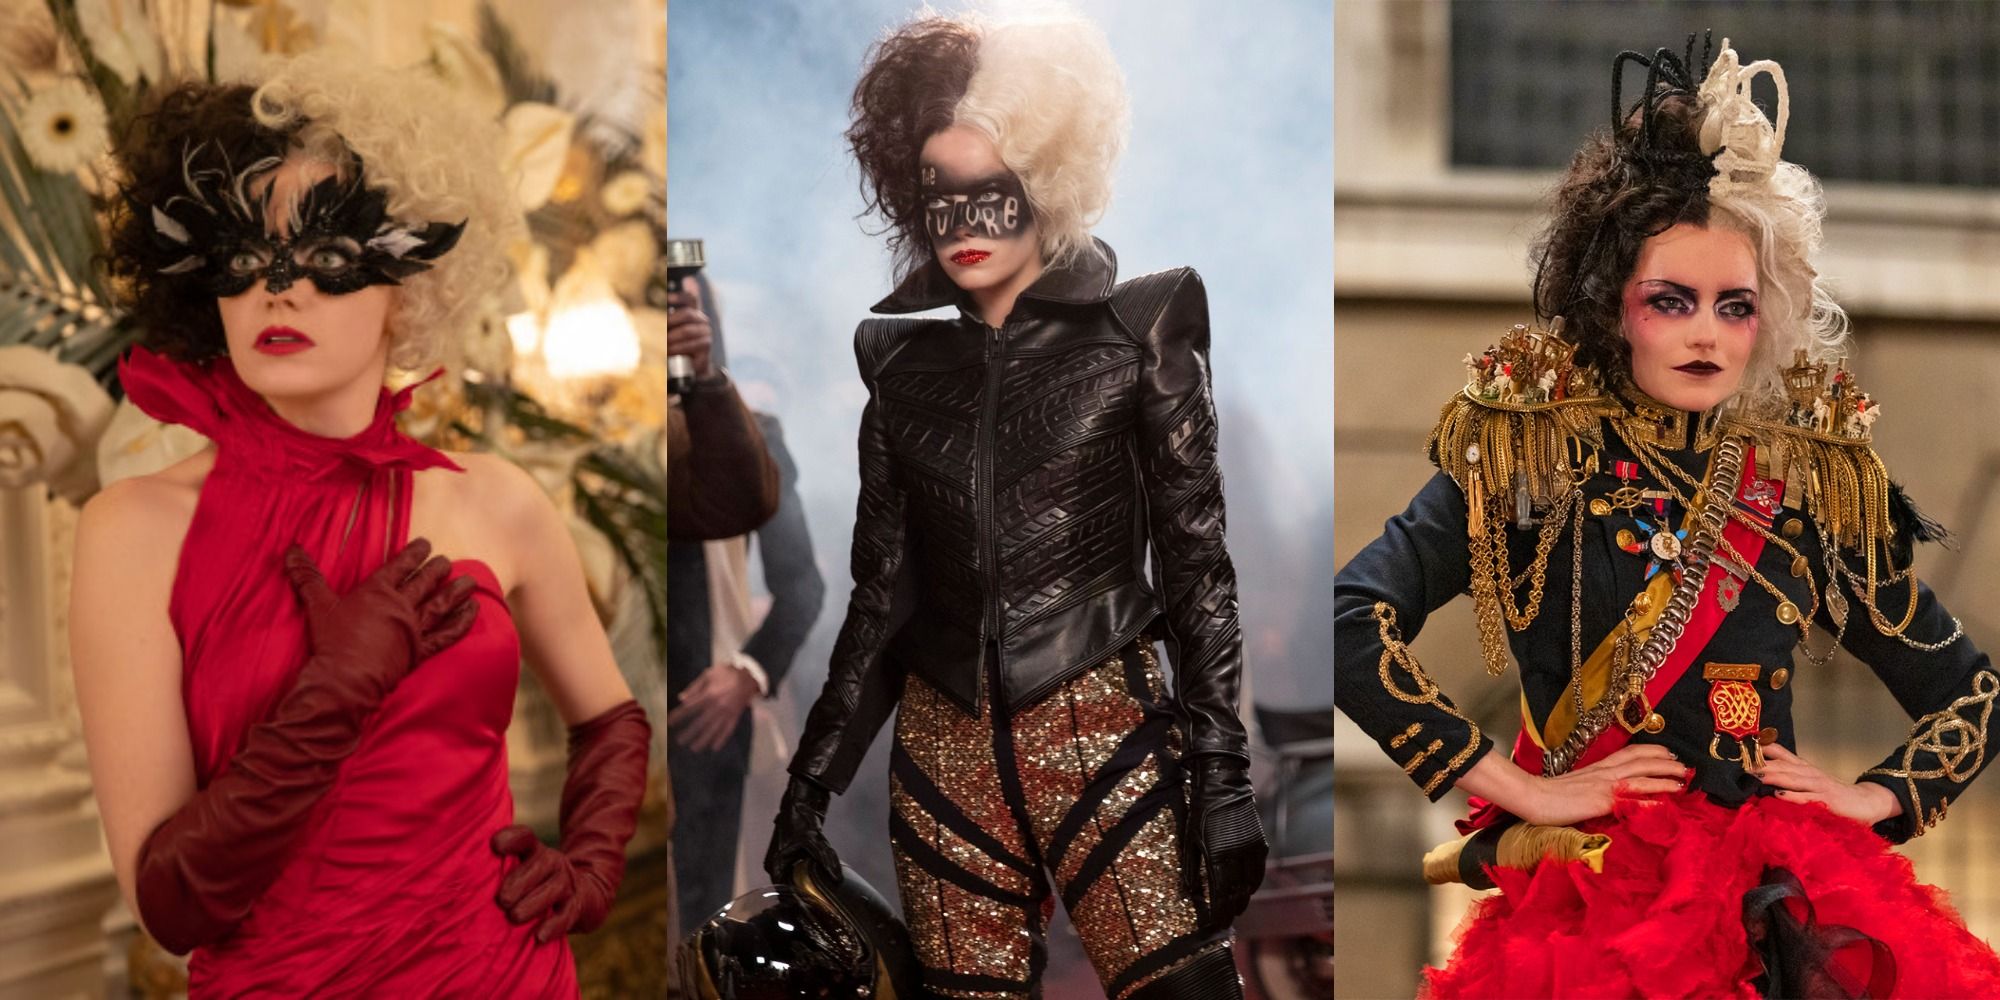 Split image depicting three costumes from the 2021 movie Cruella